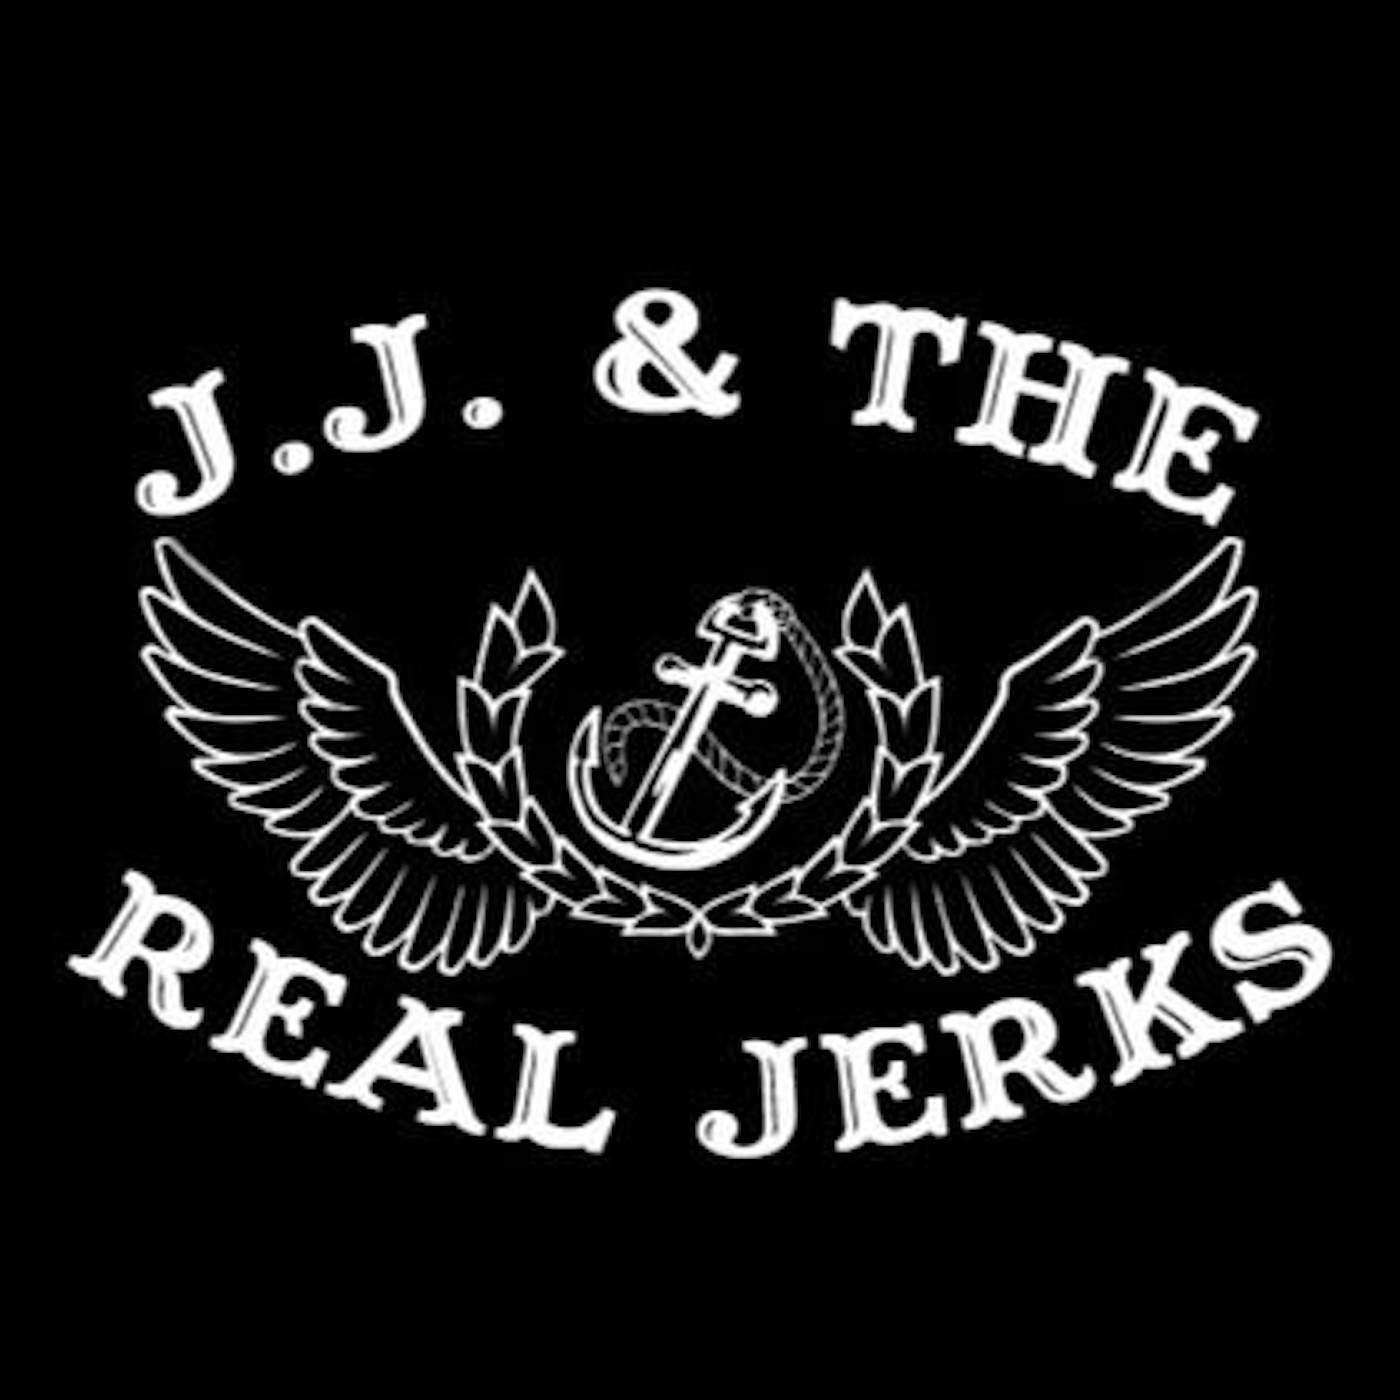 J.J. & The Real Jerks